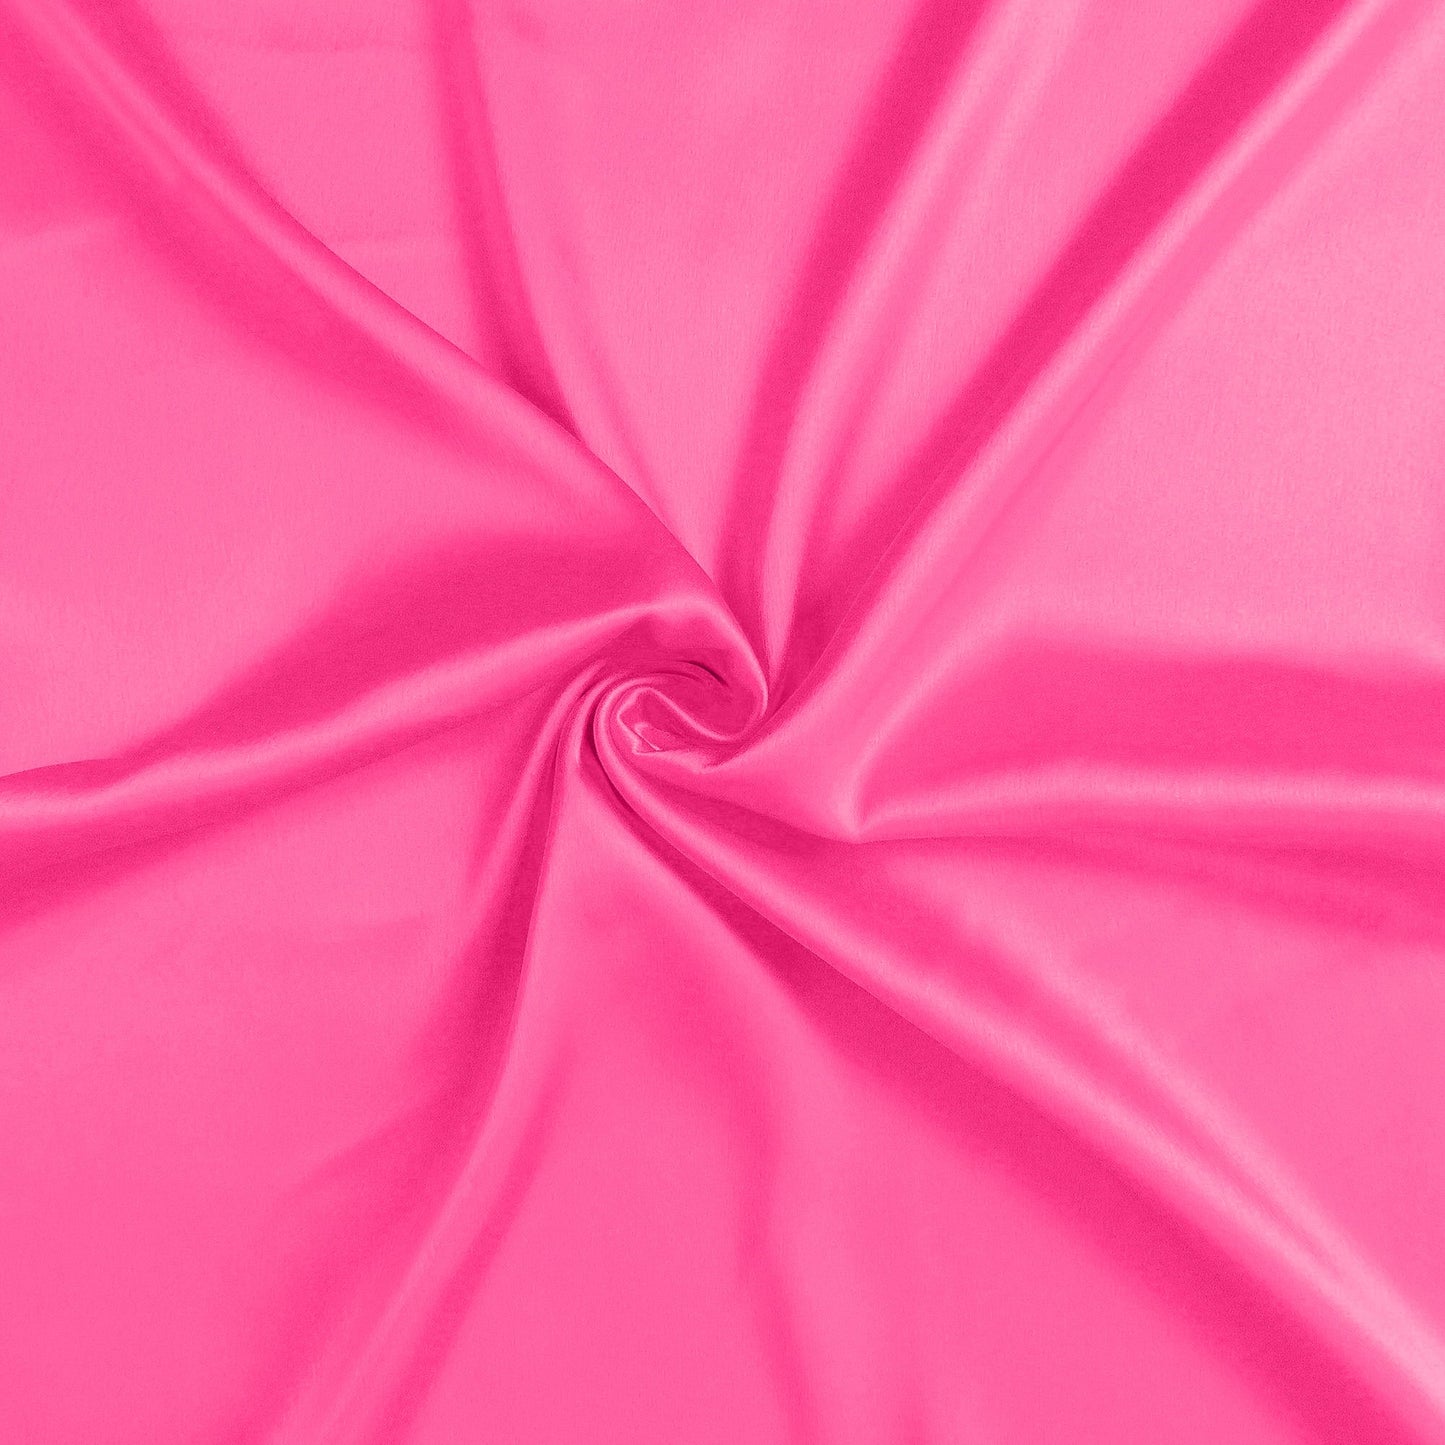 Luxury Soft Plain Satin Silk Pillowcases in Set of 2 - Pink